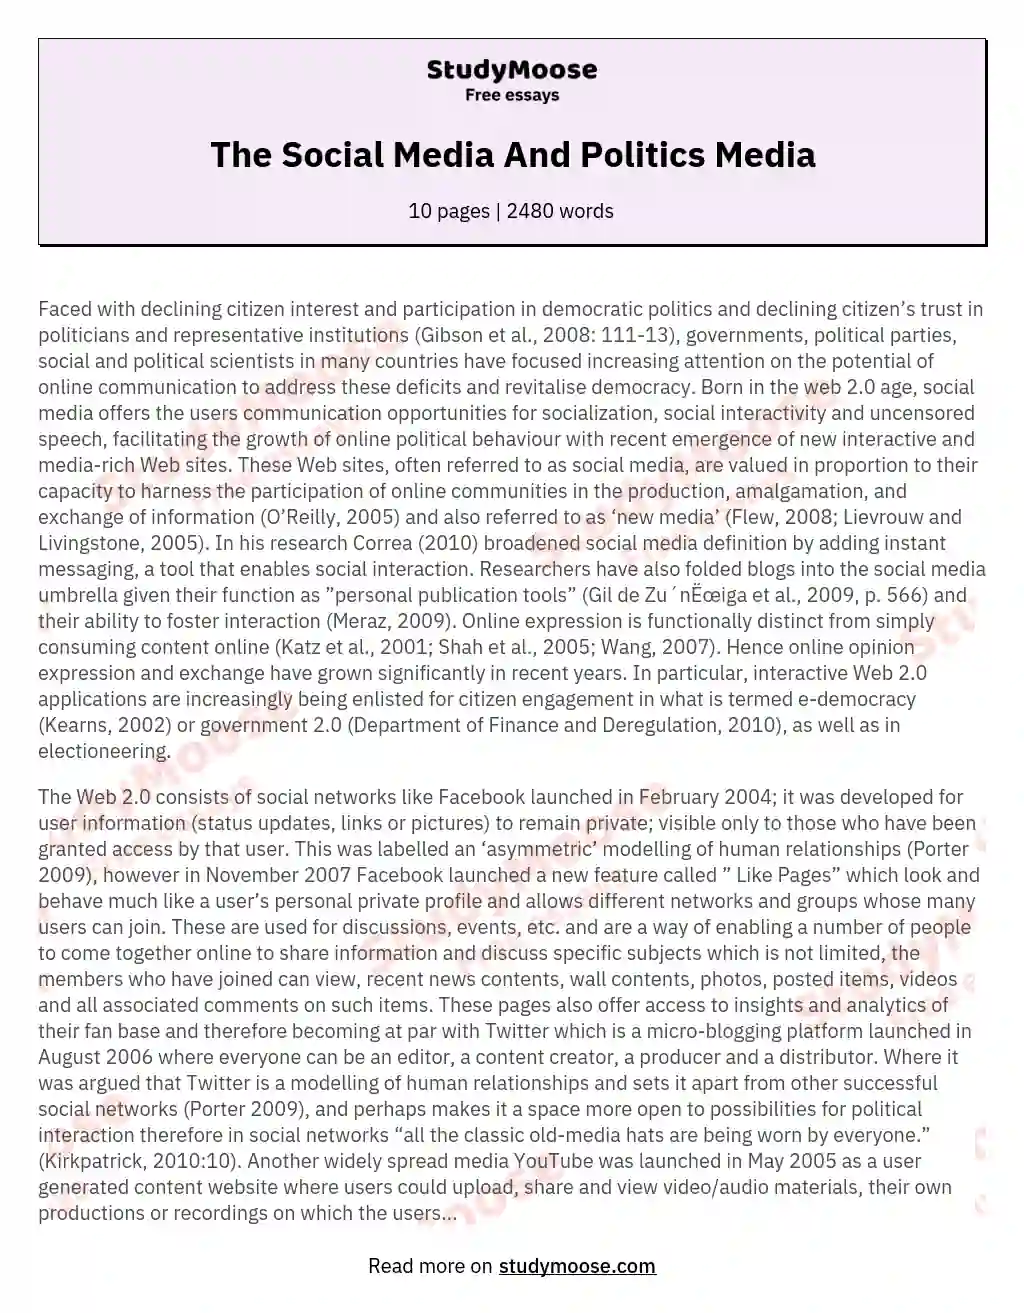 The Social Media And Politics Media